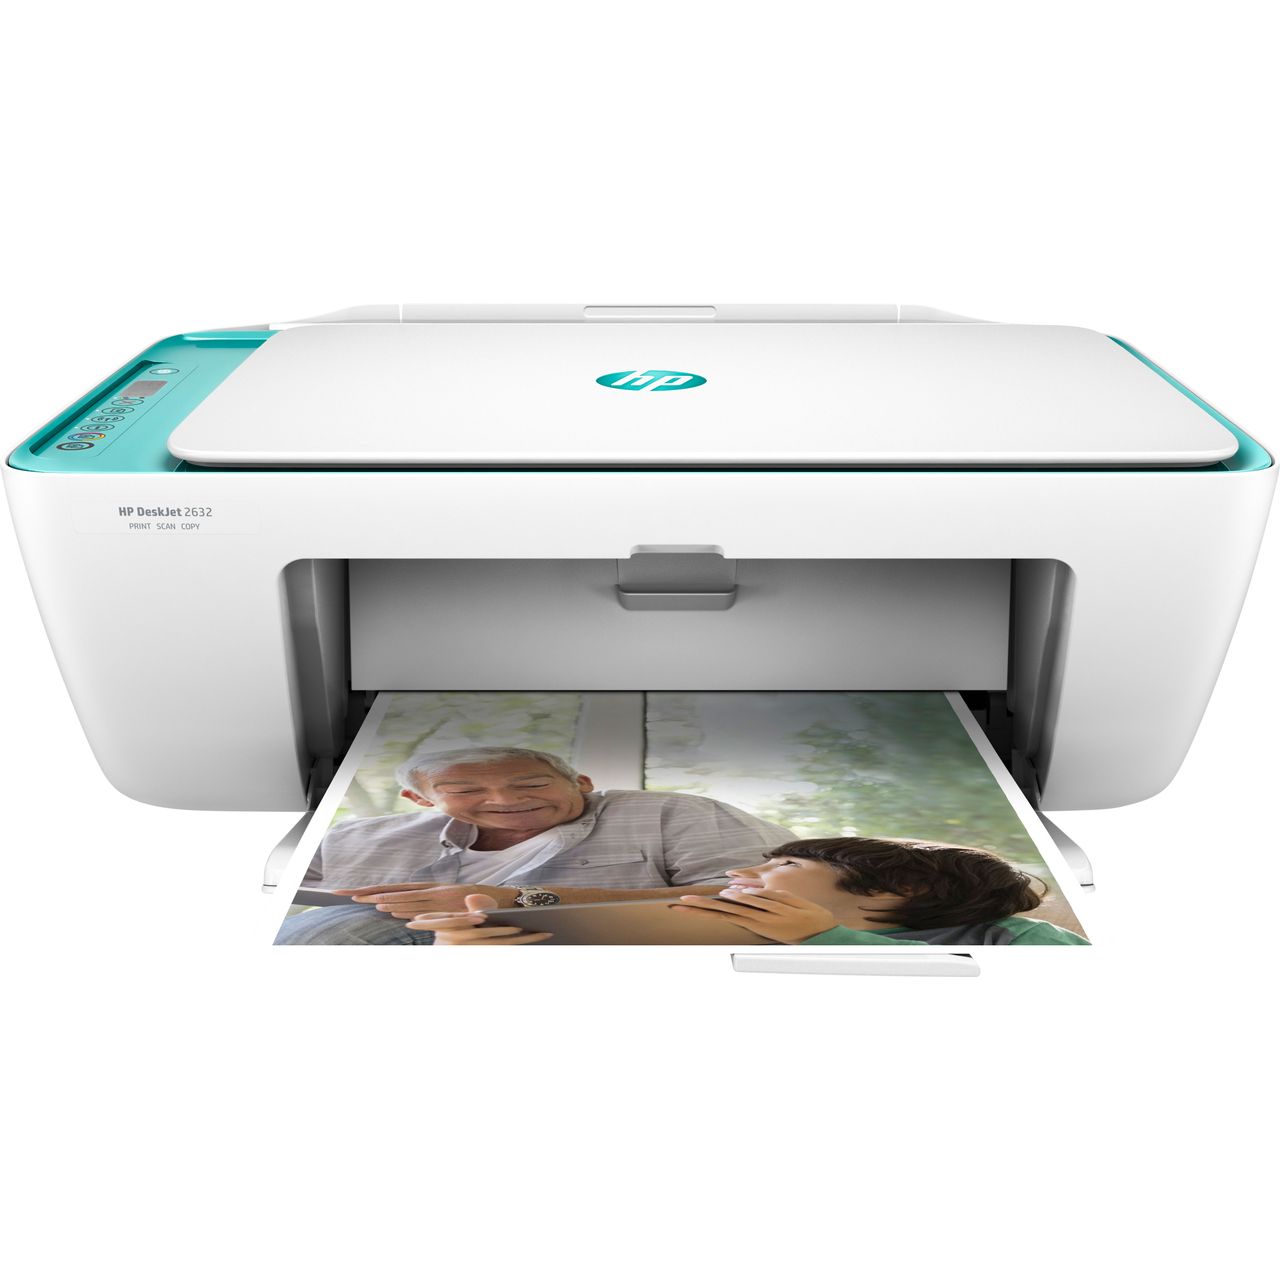 inkjet printer and scanner